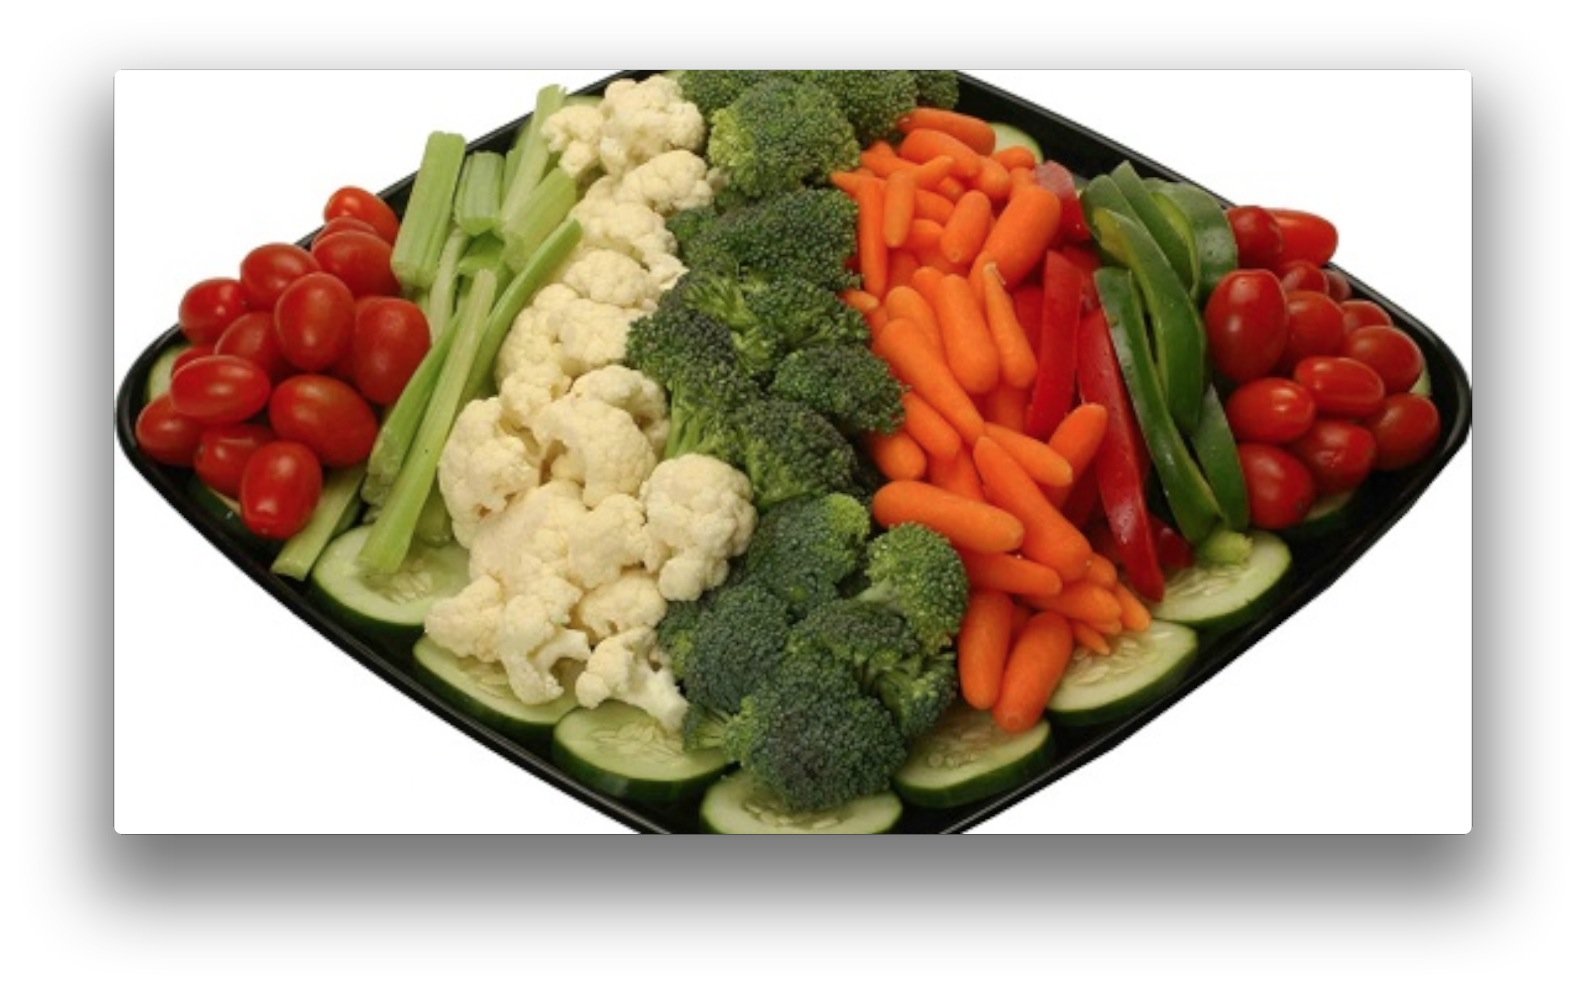 тарелка с овощами